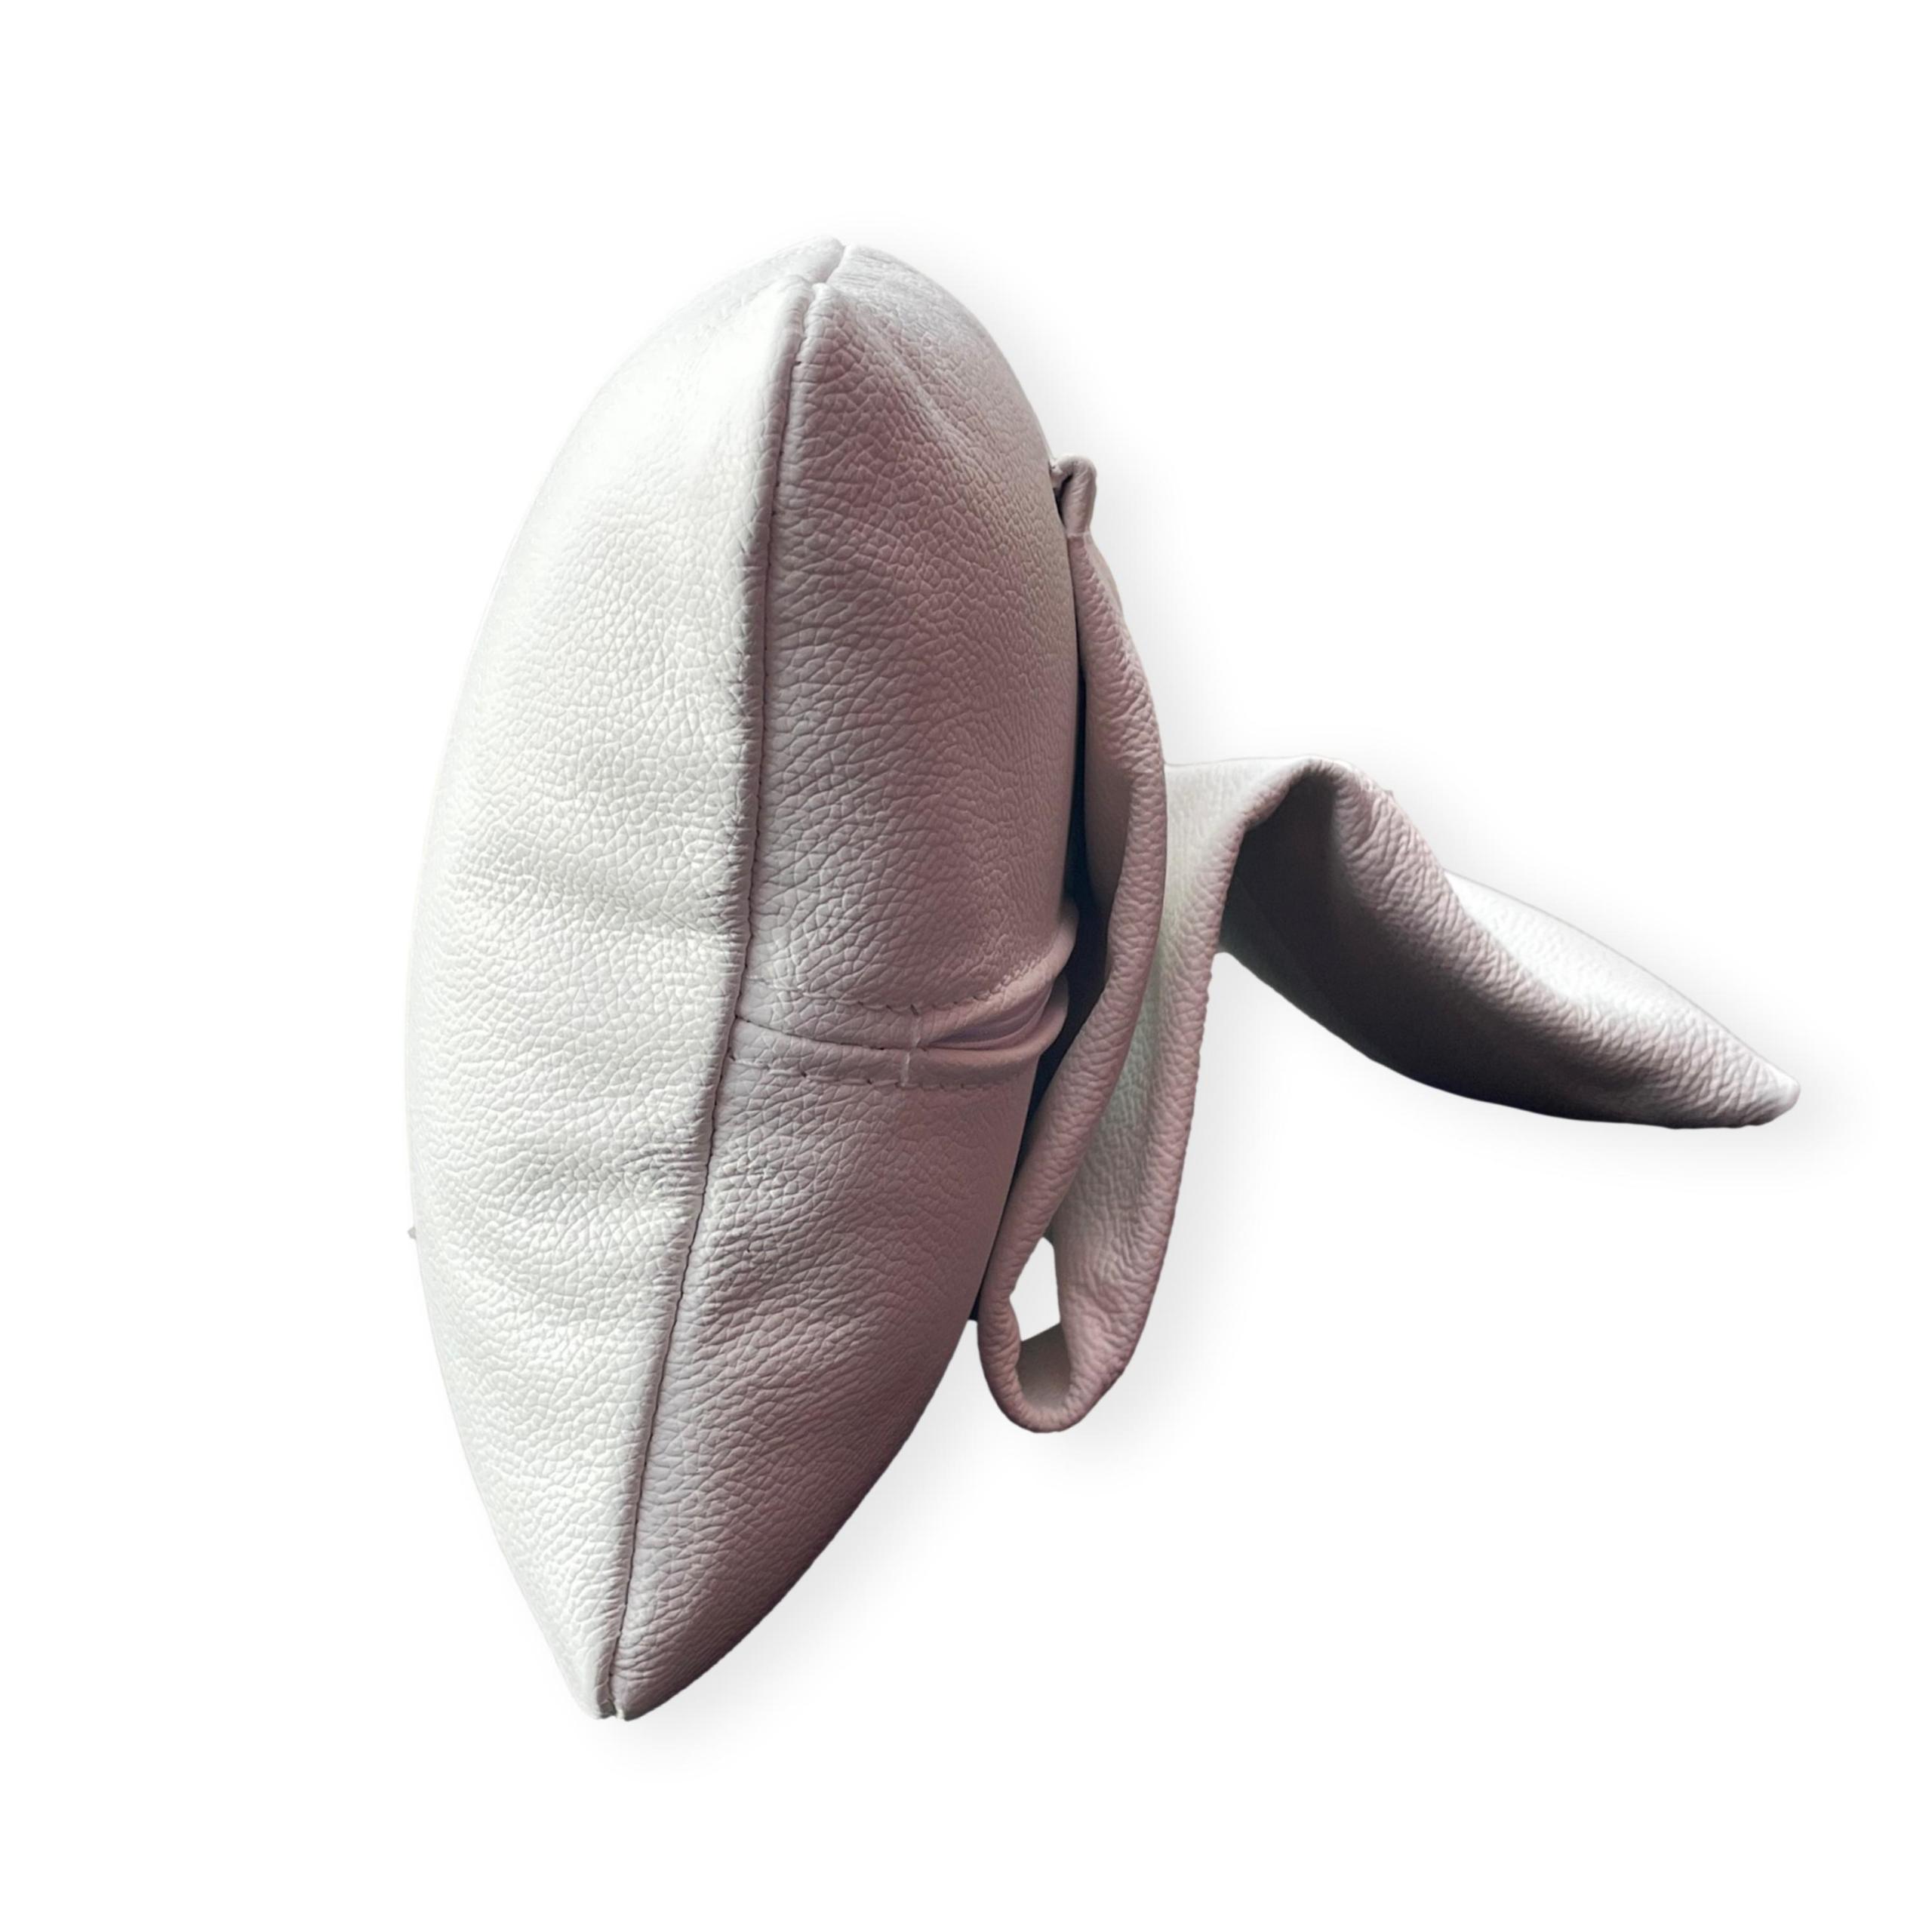 flexibles Nackenpolster Kopfkissen Sessel braun,Maße:40x25x9 cm